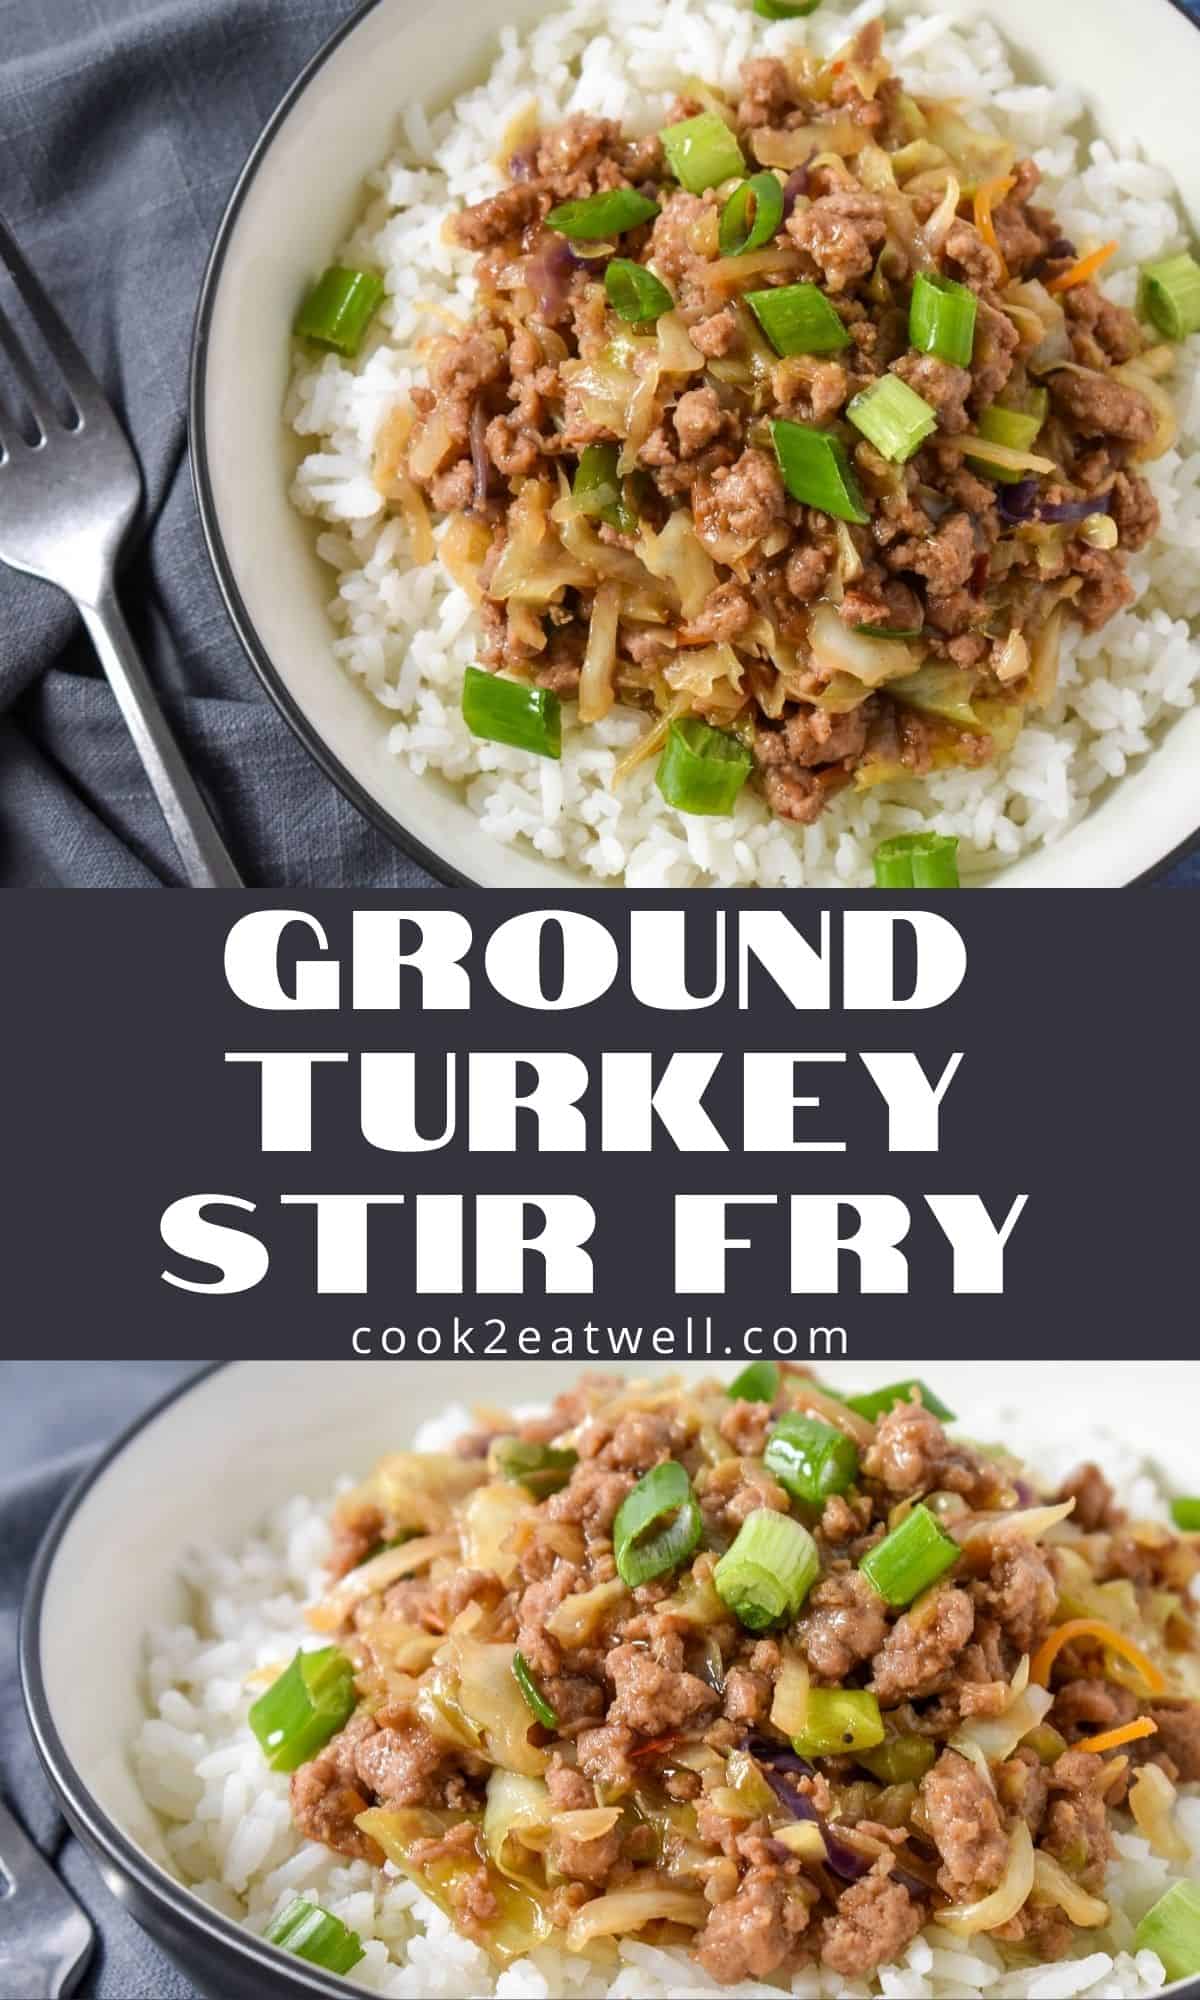 Ground Turkey Stir Fry - Cook2eatwell